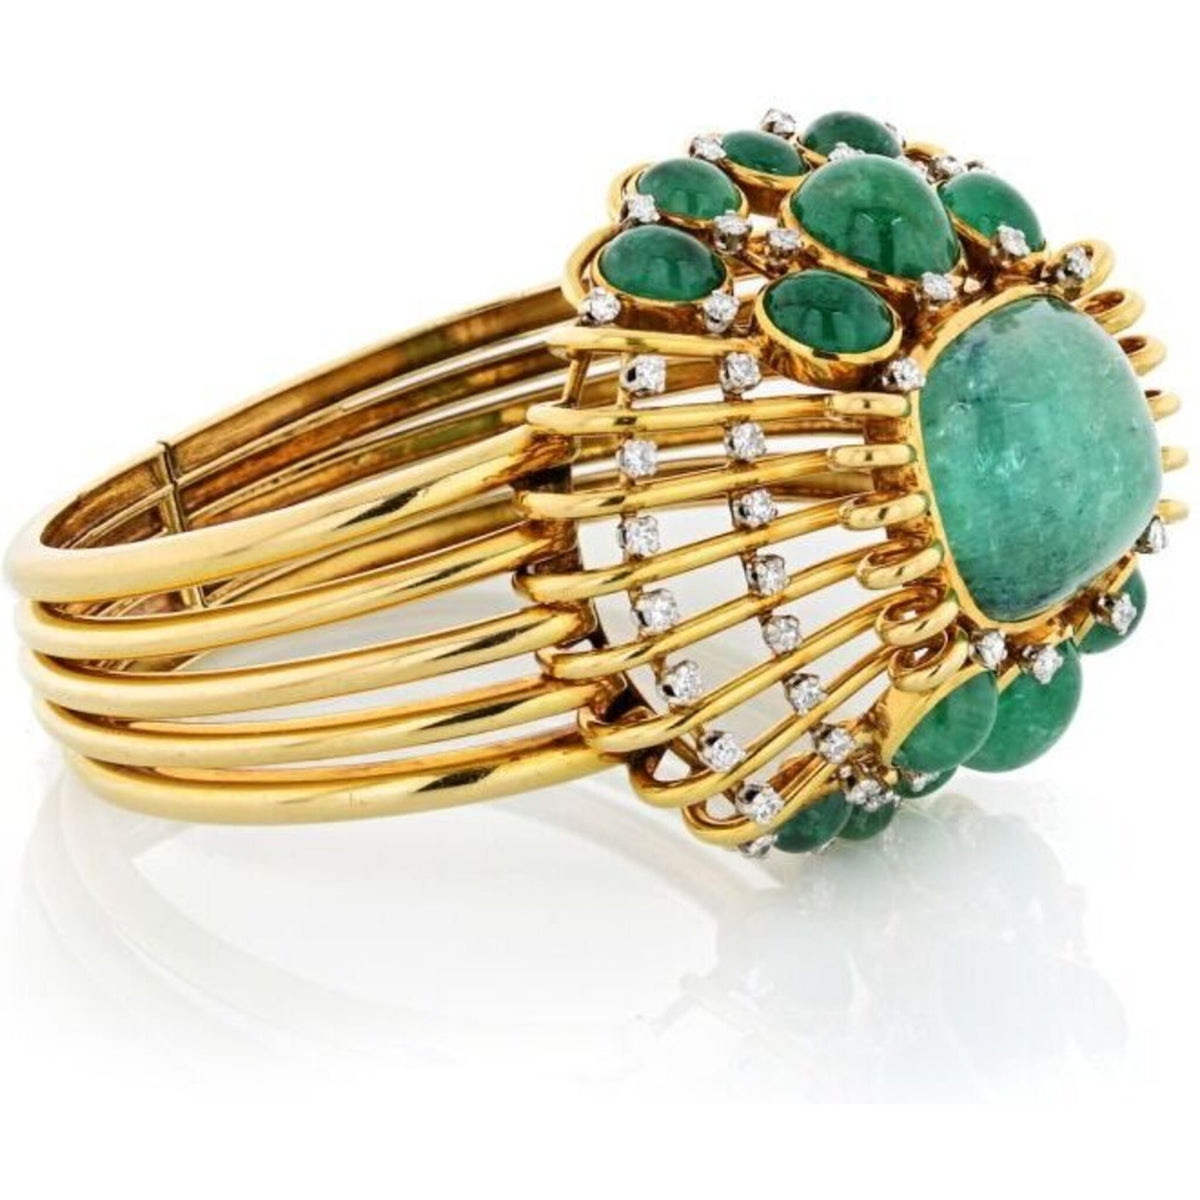 Mauboussin - Vintage 18K Yellow Gold Cabochon Green Emerald Cuff Bangle Bracelet